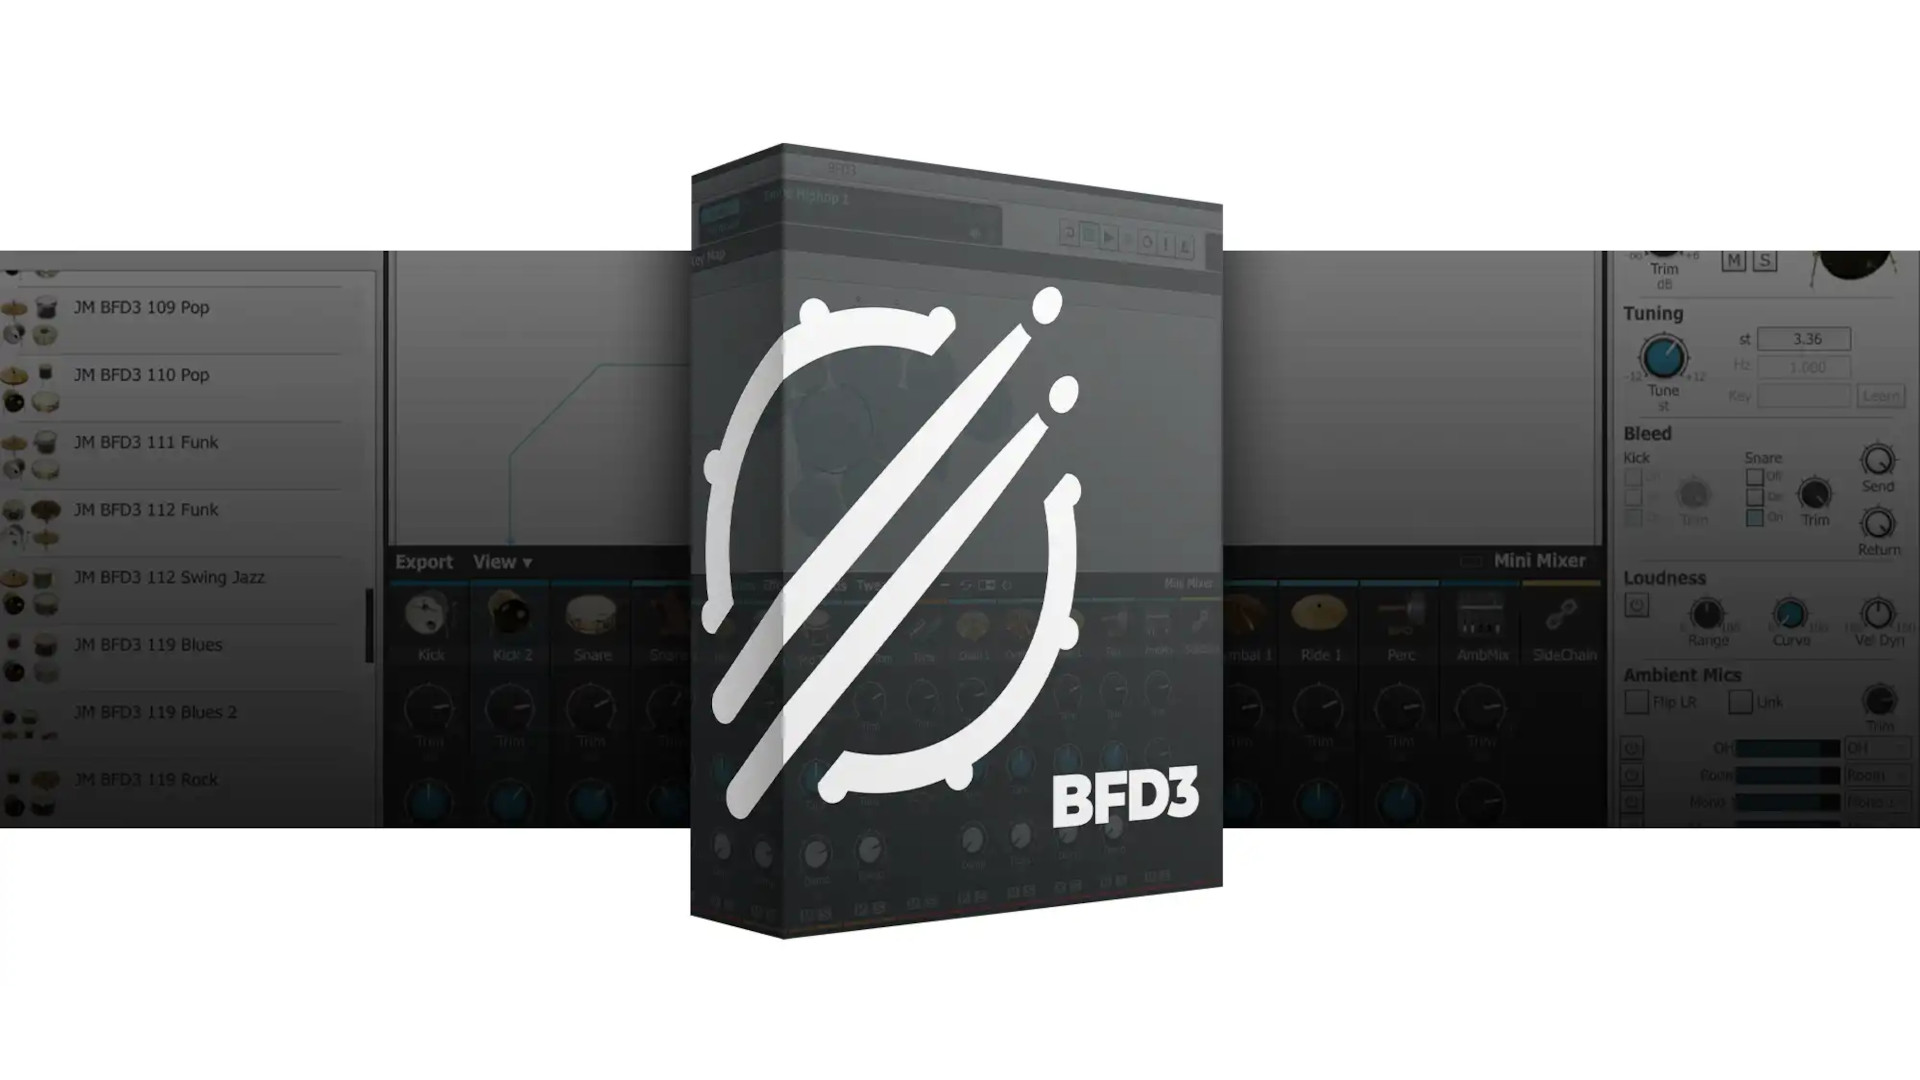 inmusic BFD3 PC/MAC CD Key [$ 100.57]